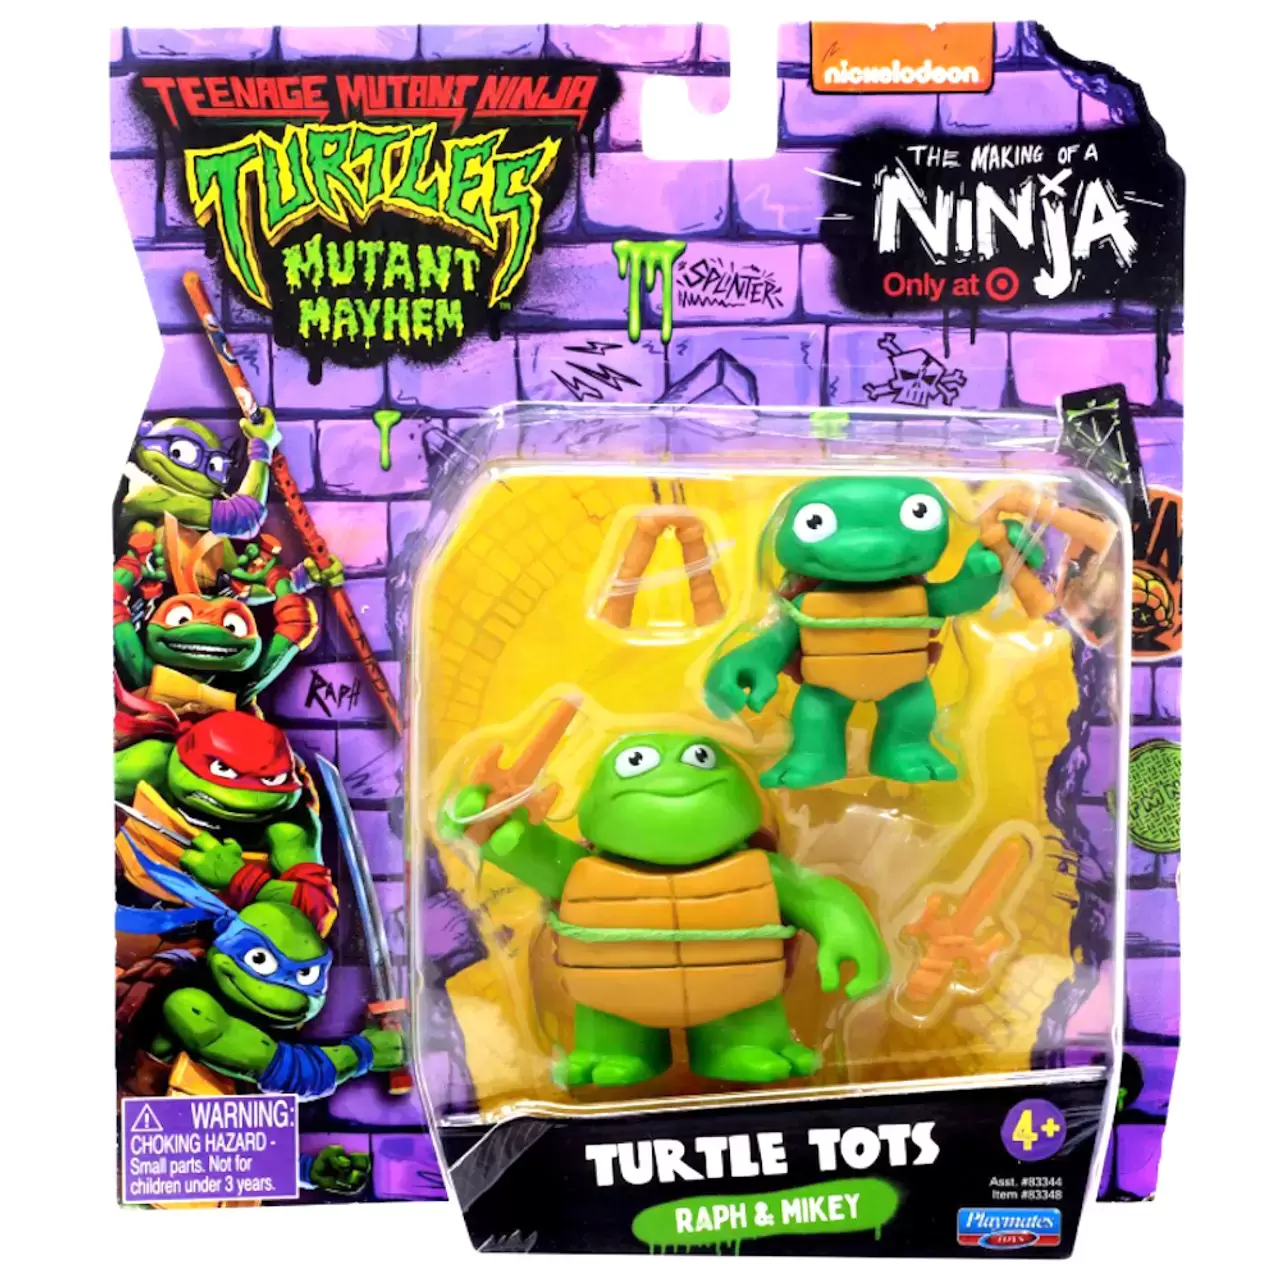 https://www.coleka.com/media/item/202307/21/teenage-mutant-ninja-turtles-mutant-mayhem-turtle-tots-raph-mikey.webp